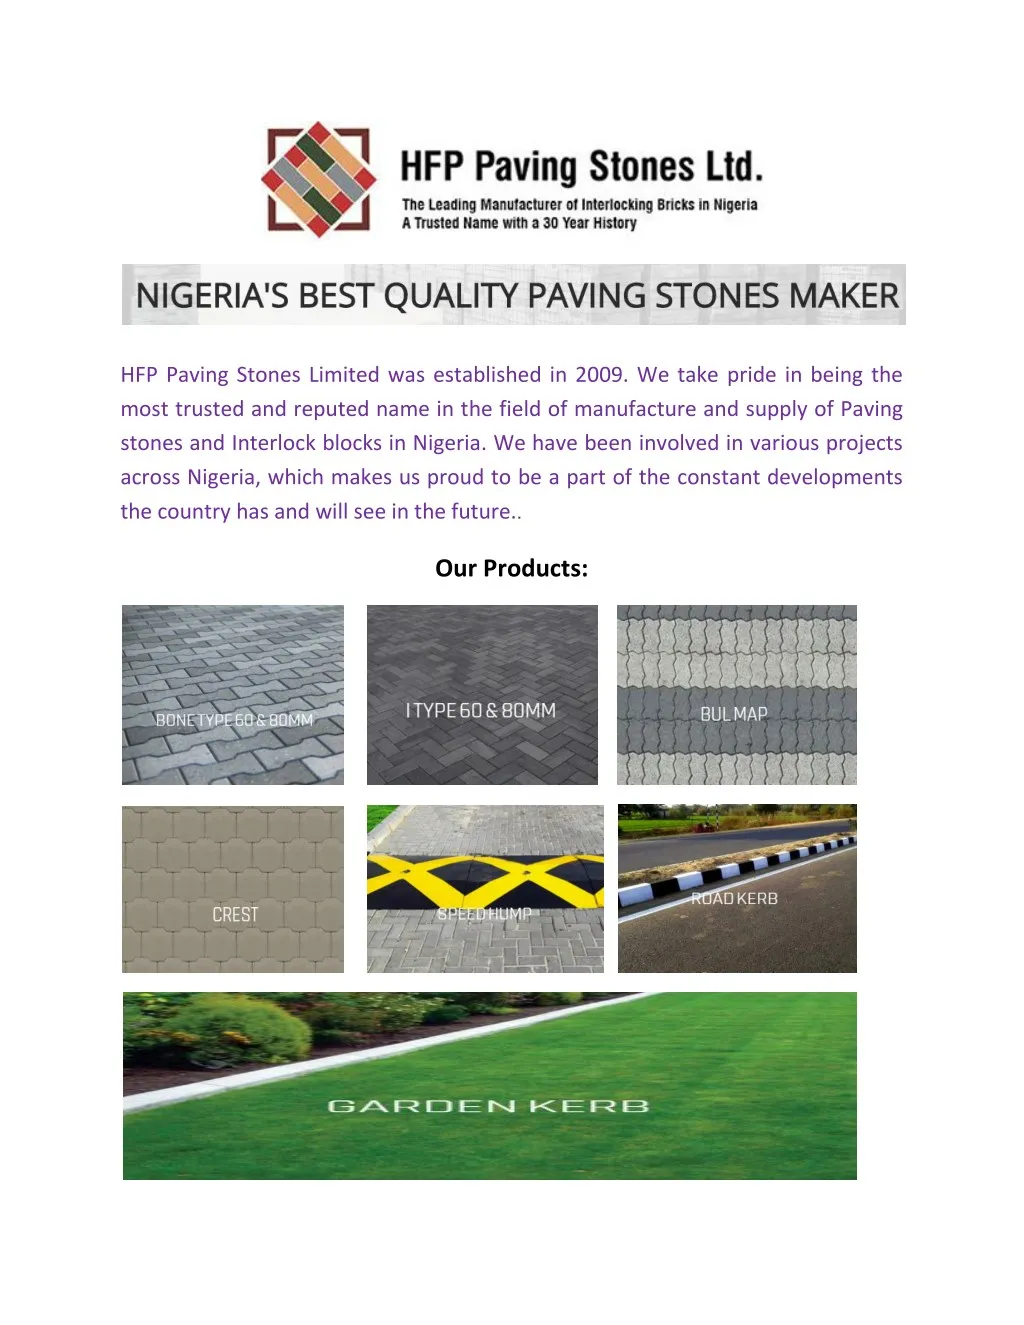 hfp paving stones limited was established in 2009